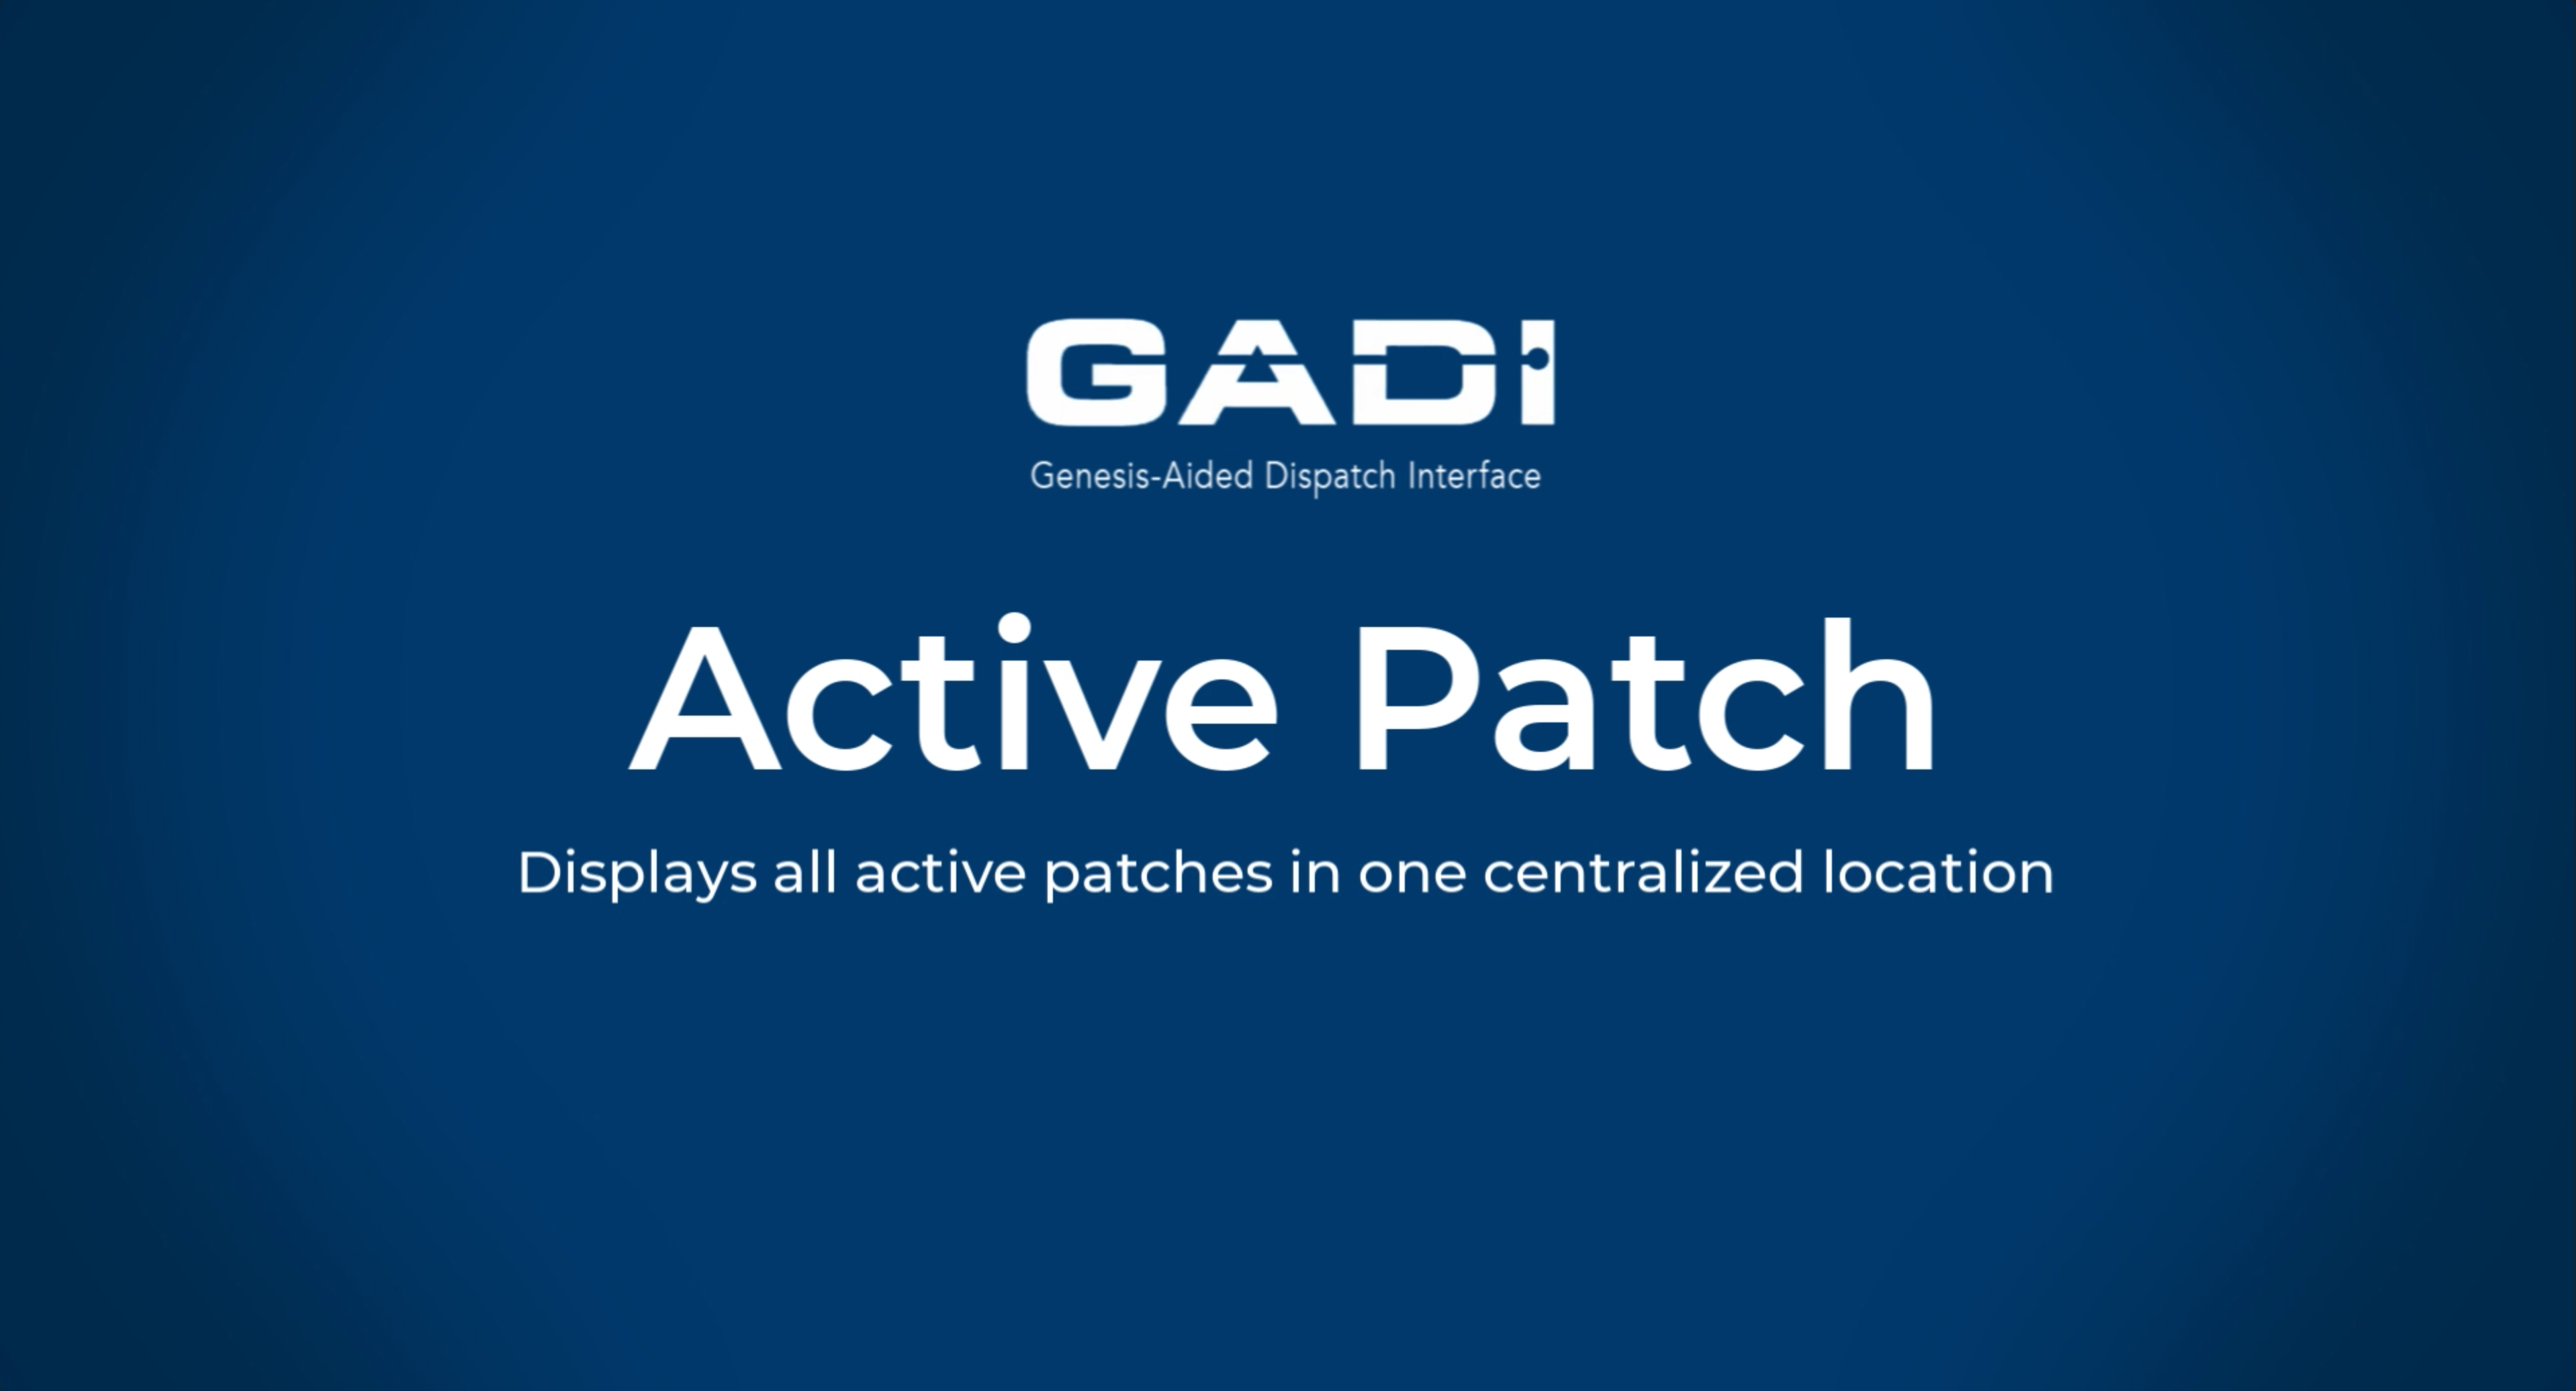 GADI_Active_Patch